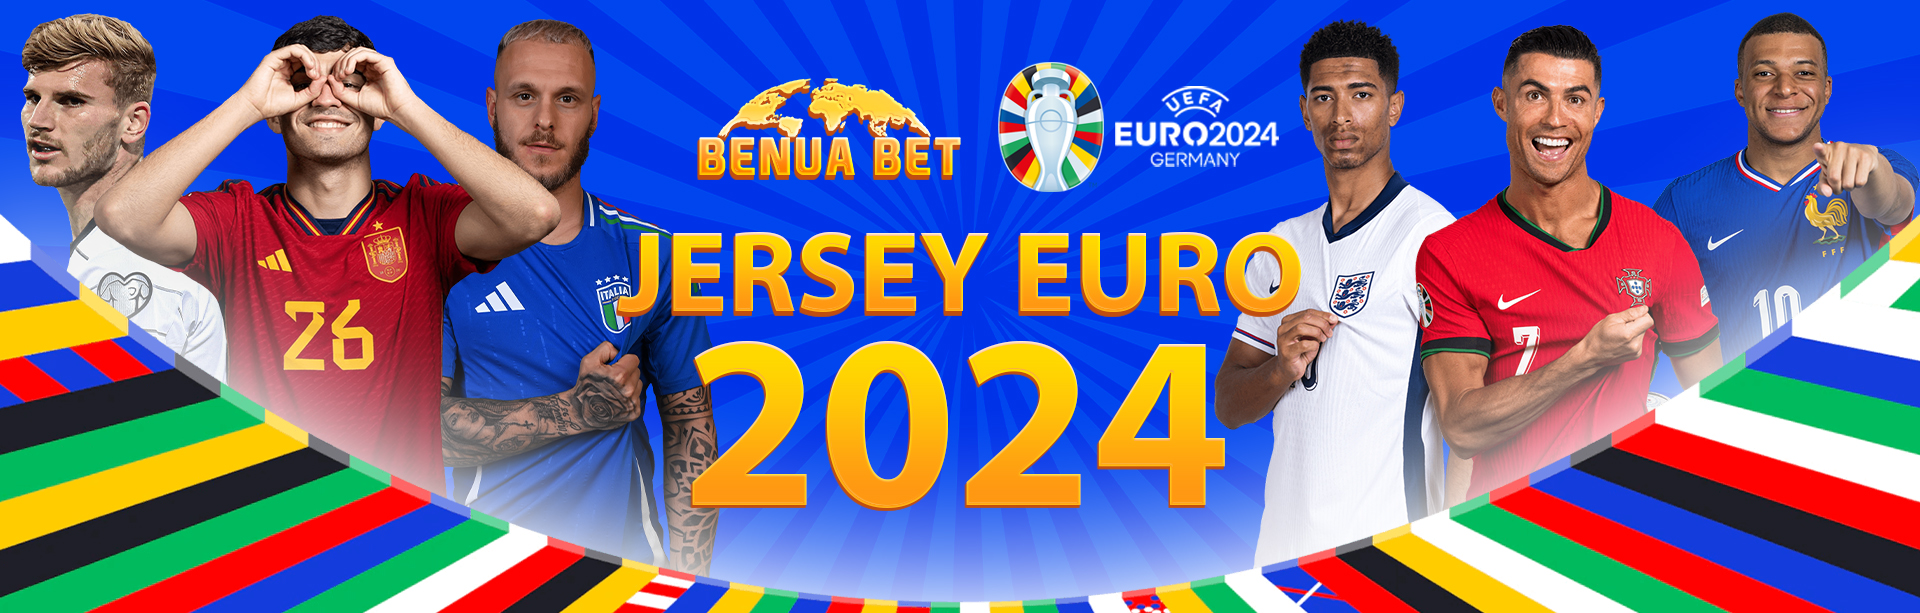 JERSEY EURO 2024